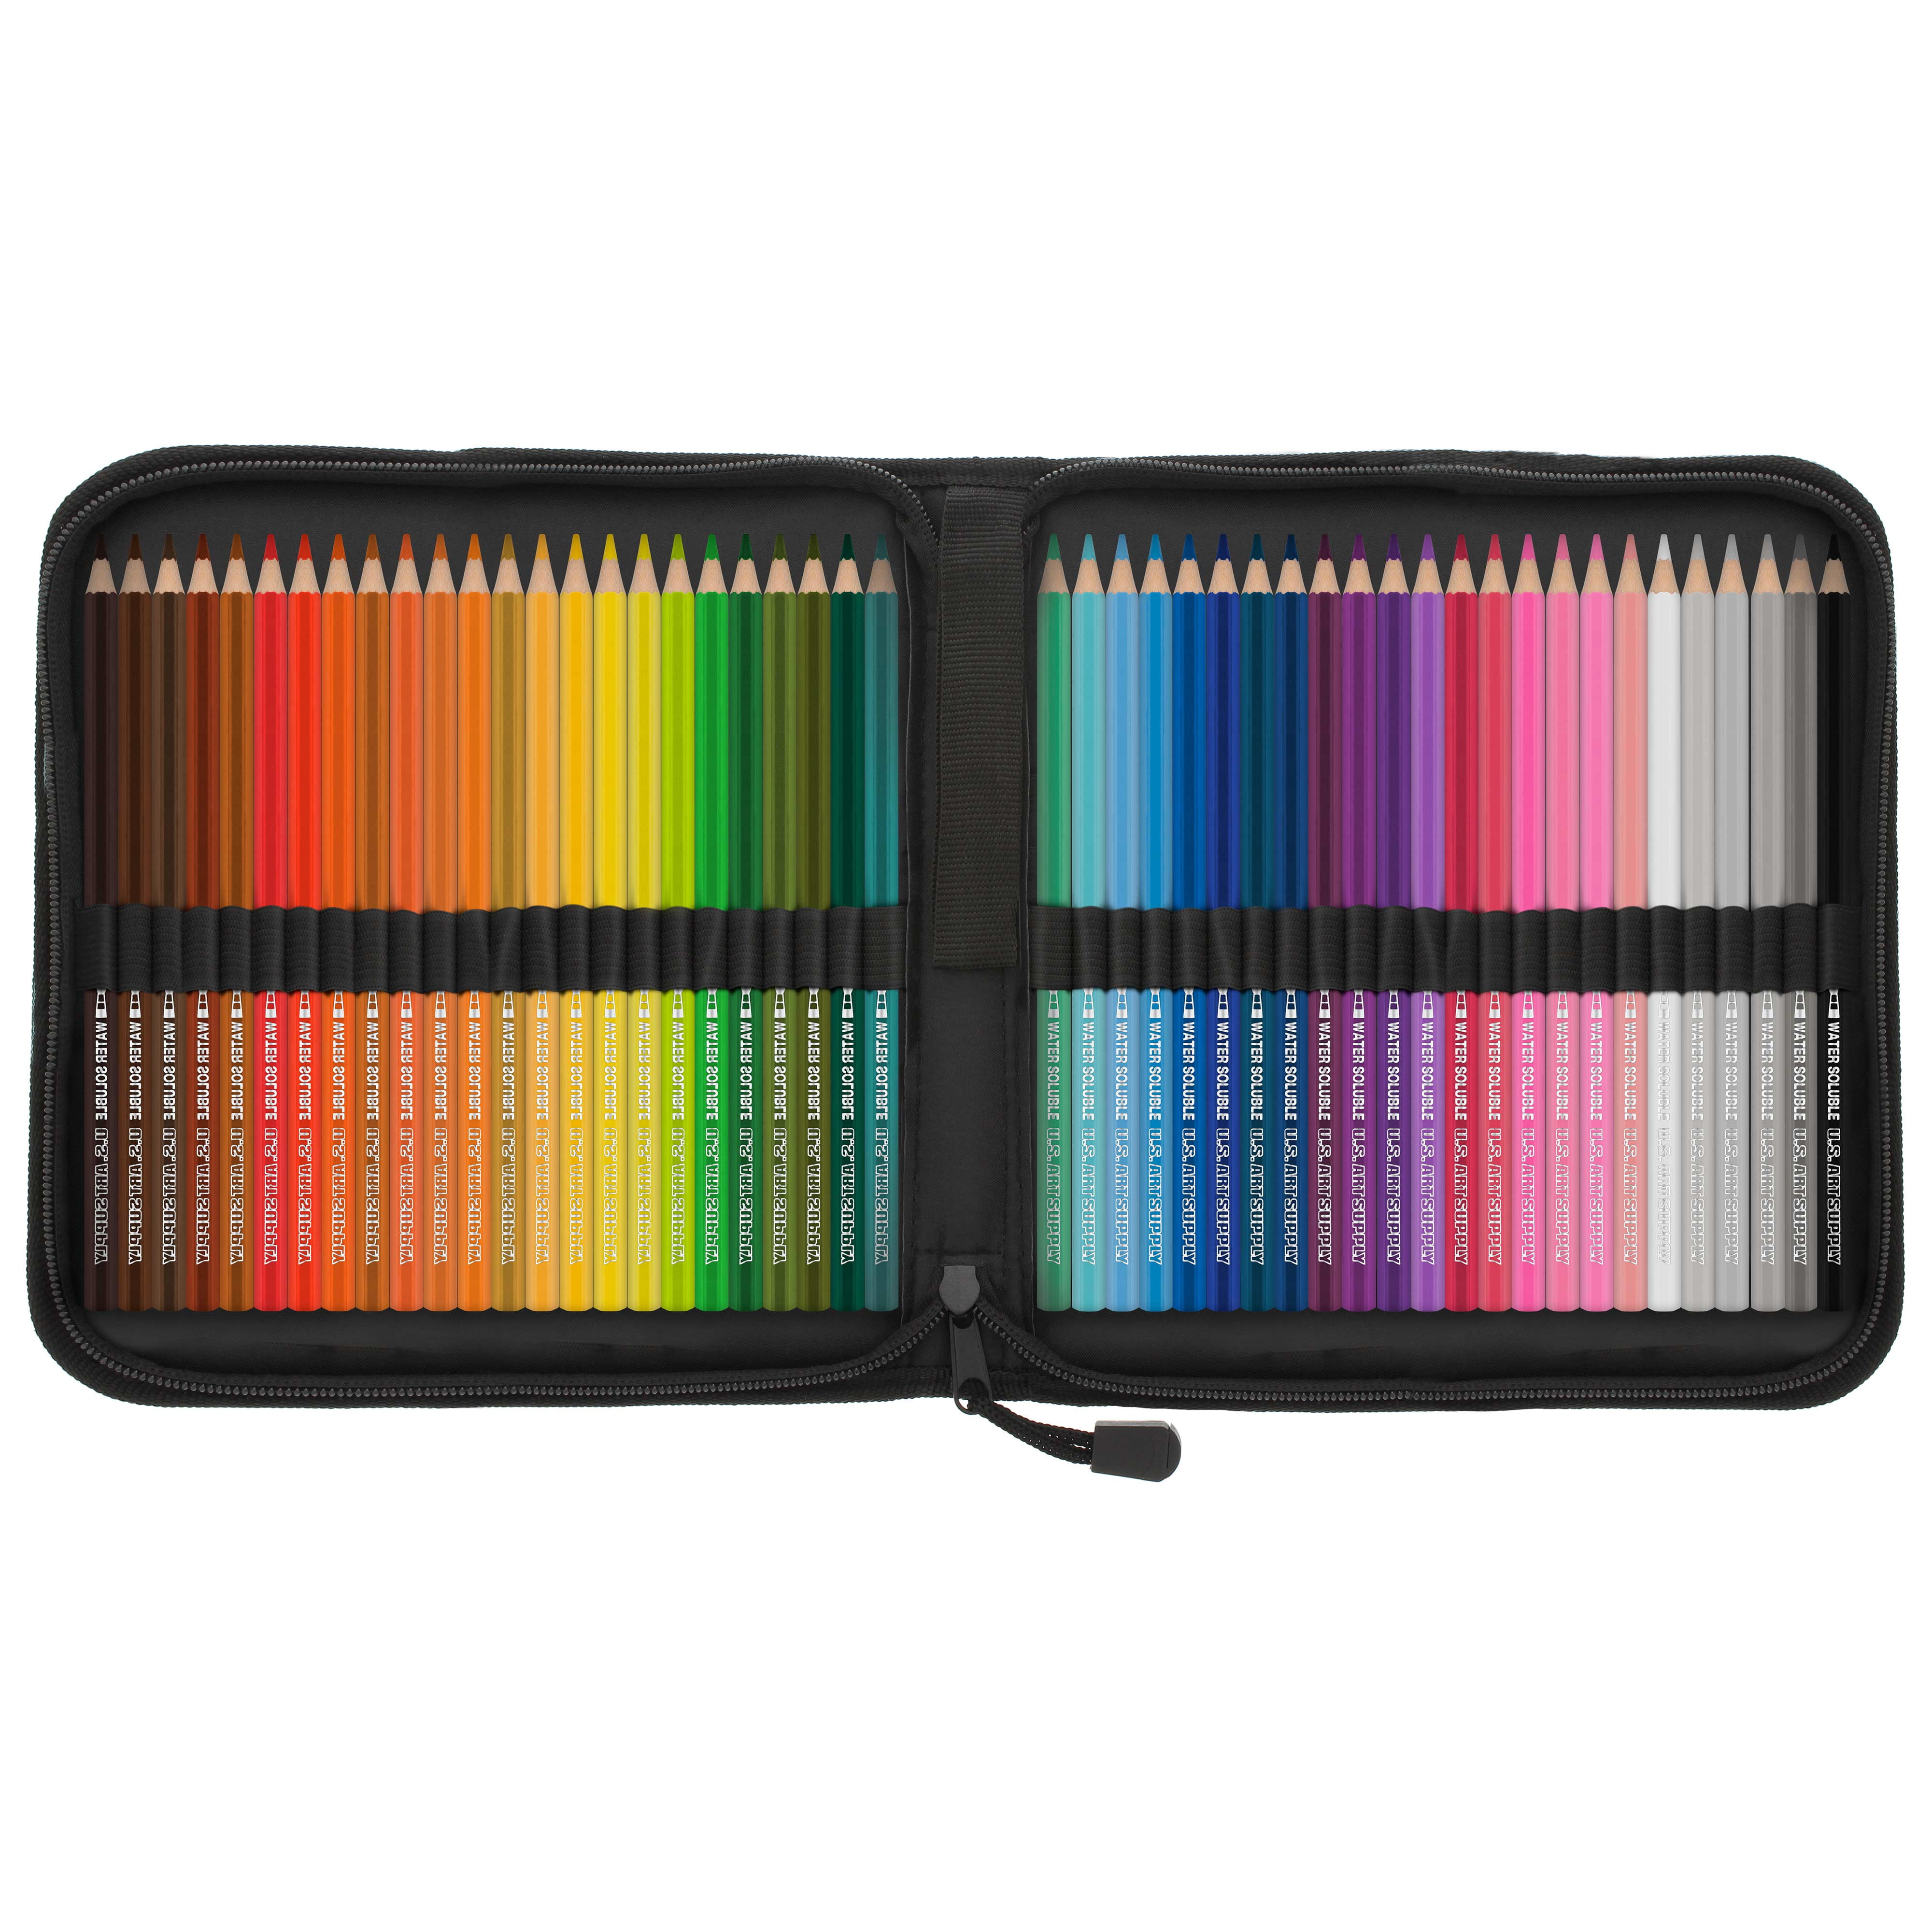 Cra-Z-Art Classic Colored Pencils, 72 Count, Assorted Colors 